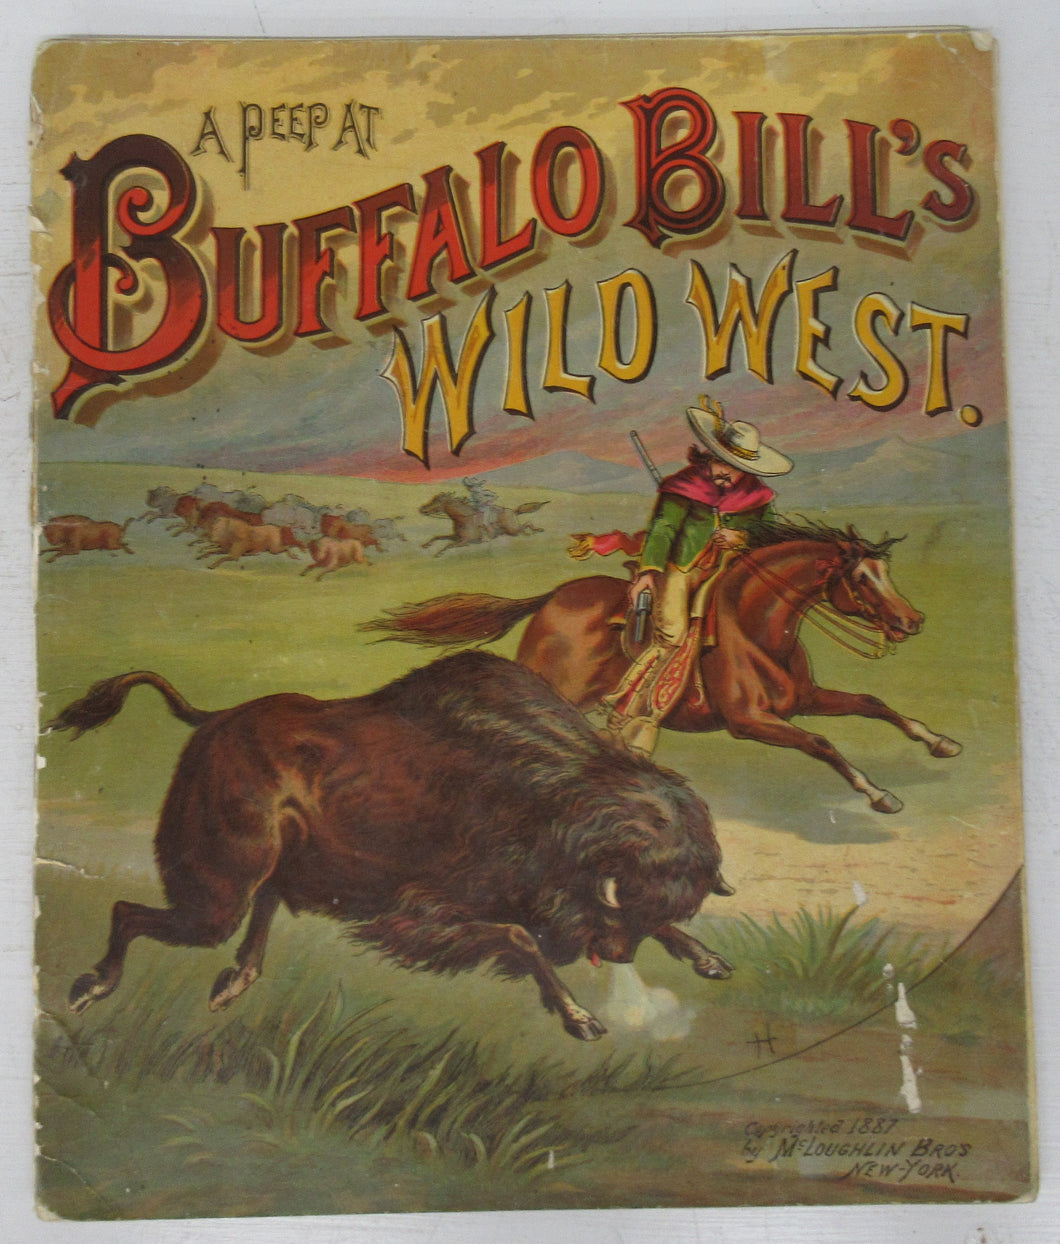 A Peep at Buffalo Bill's Wild West.